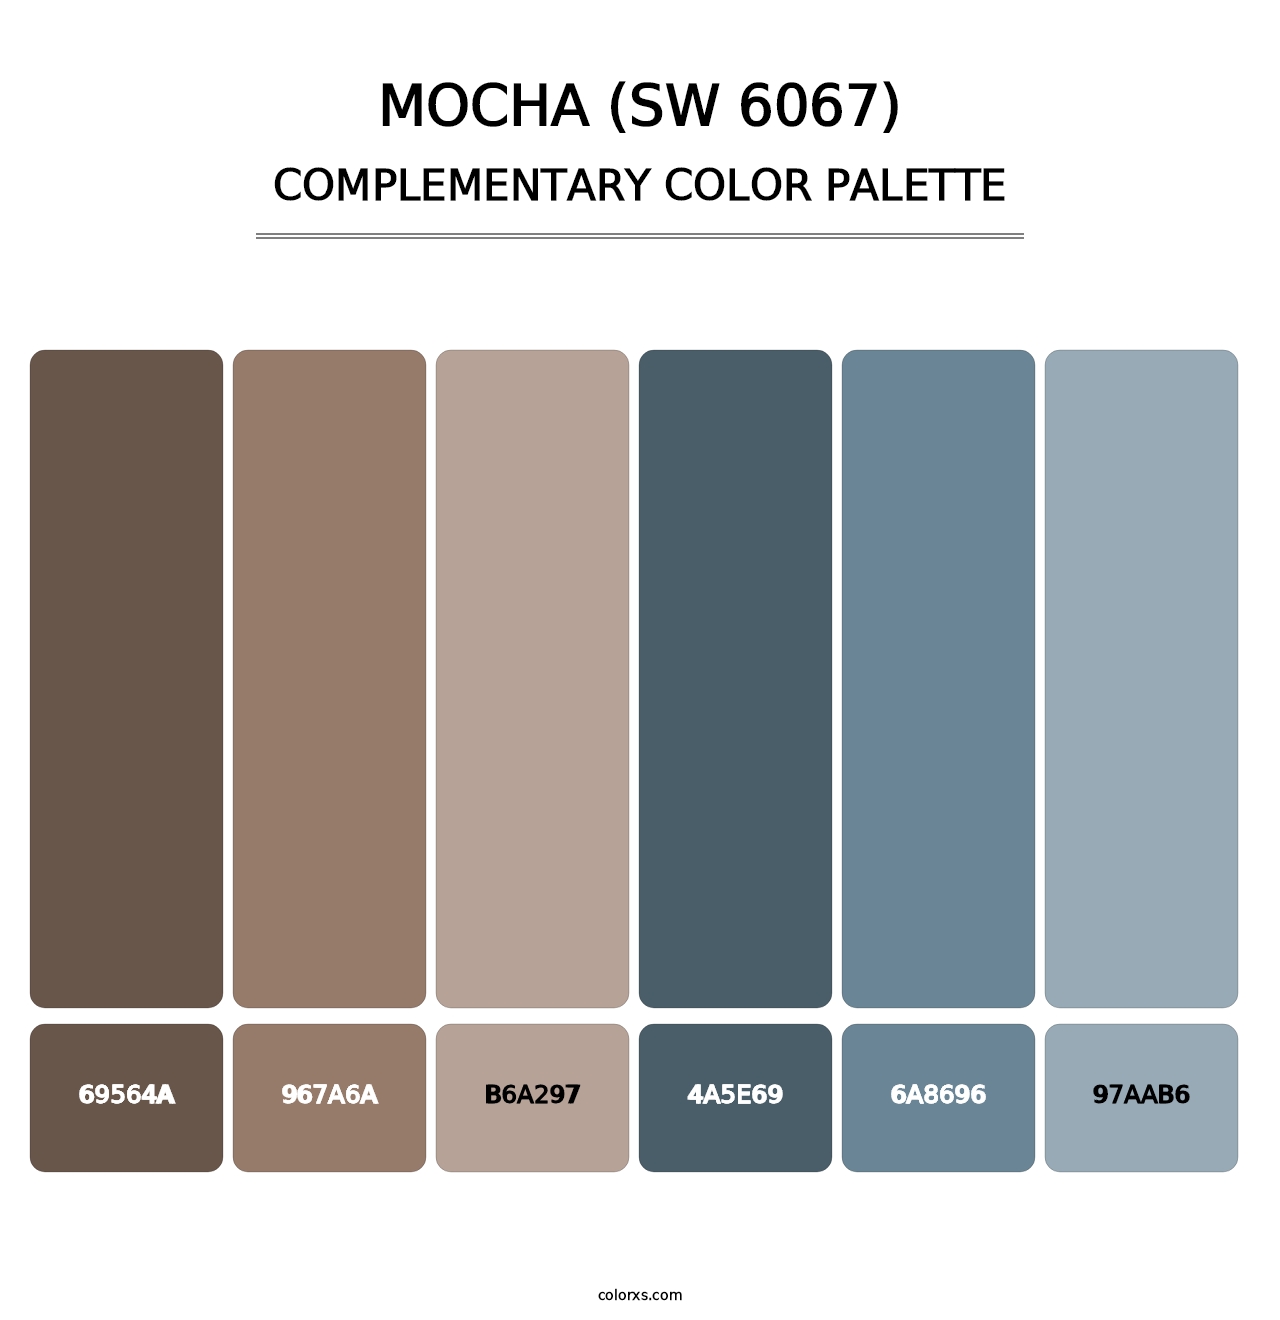 Mocha (SW 6067) - Complementary Color Palette